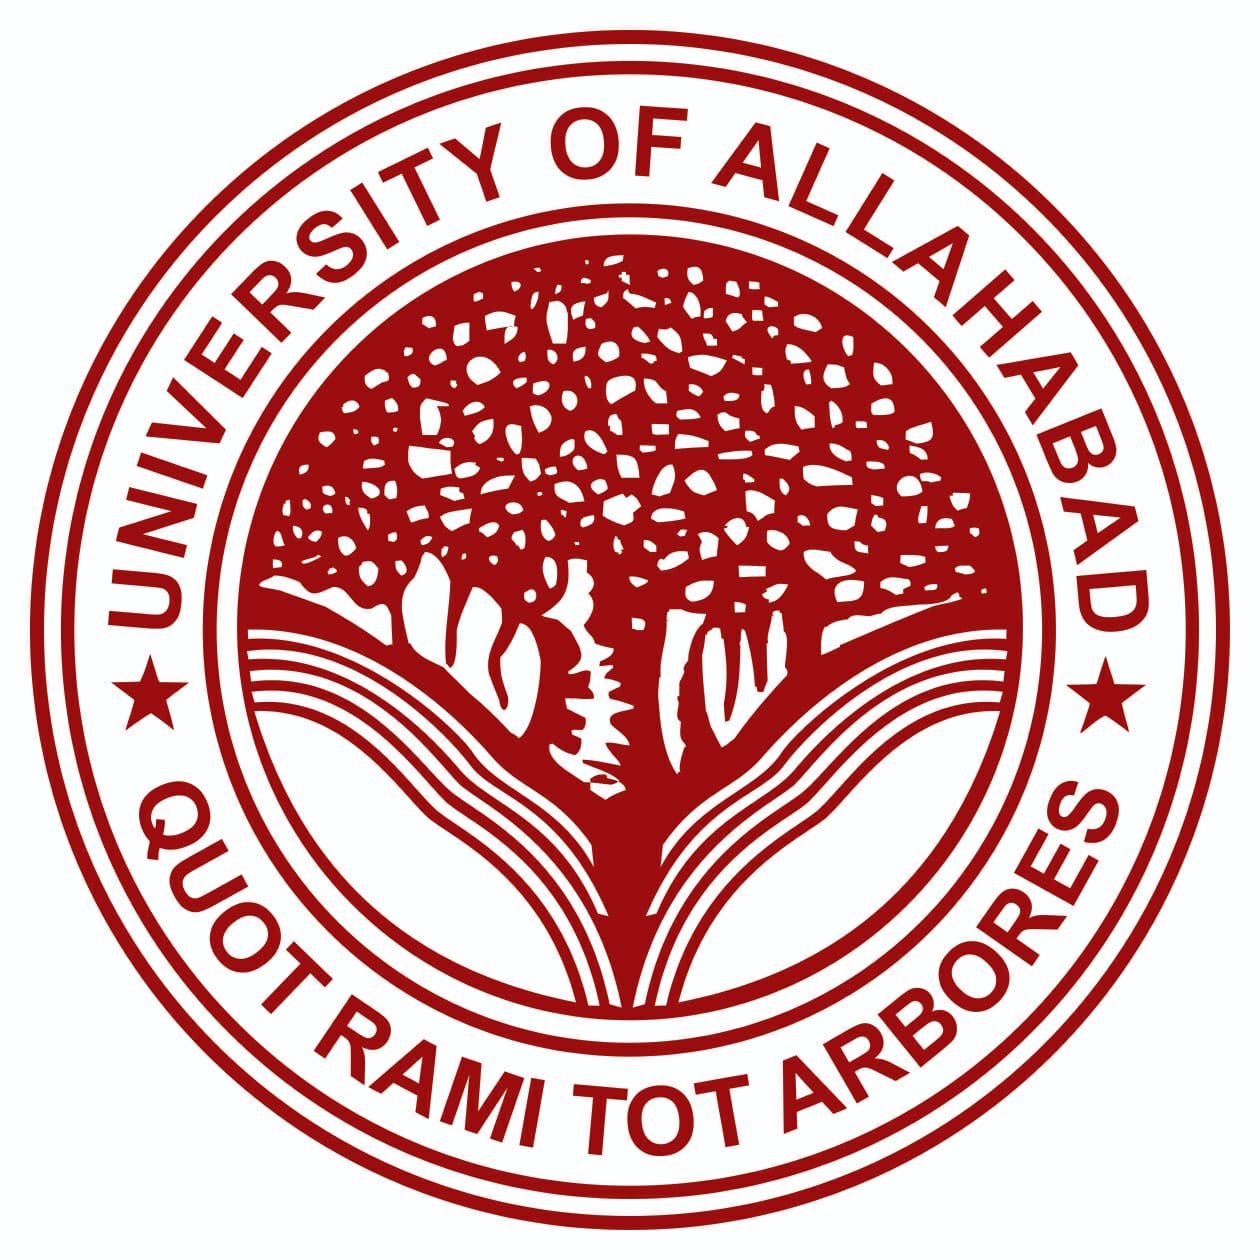 University-of-allahabad